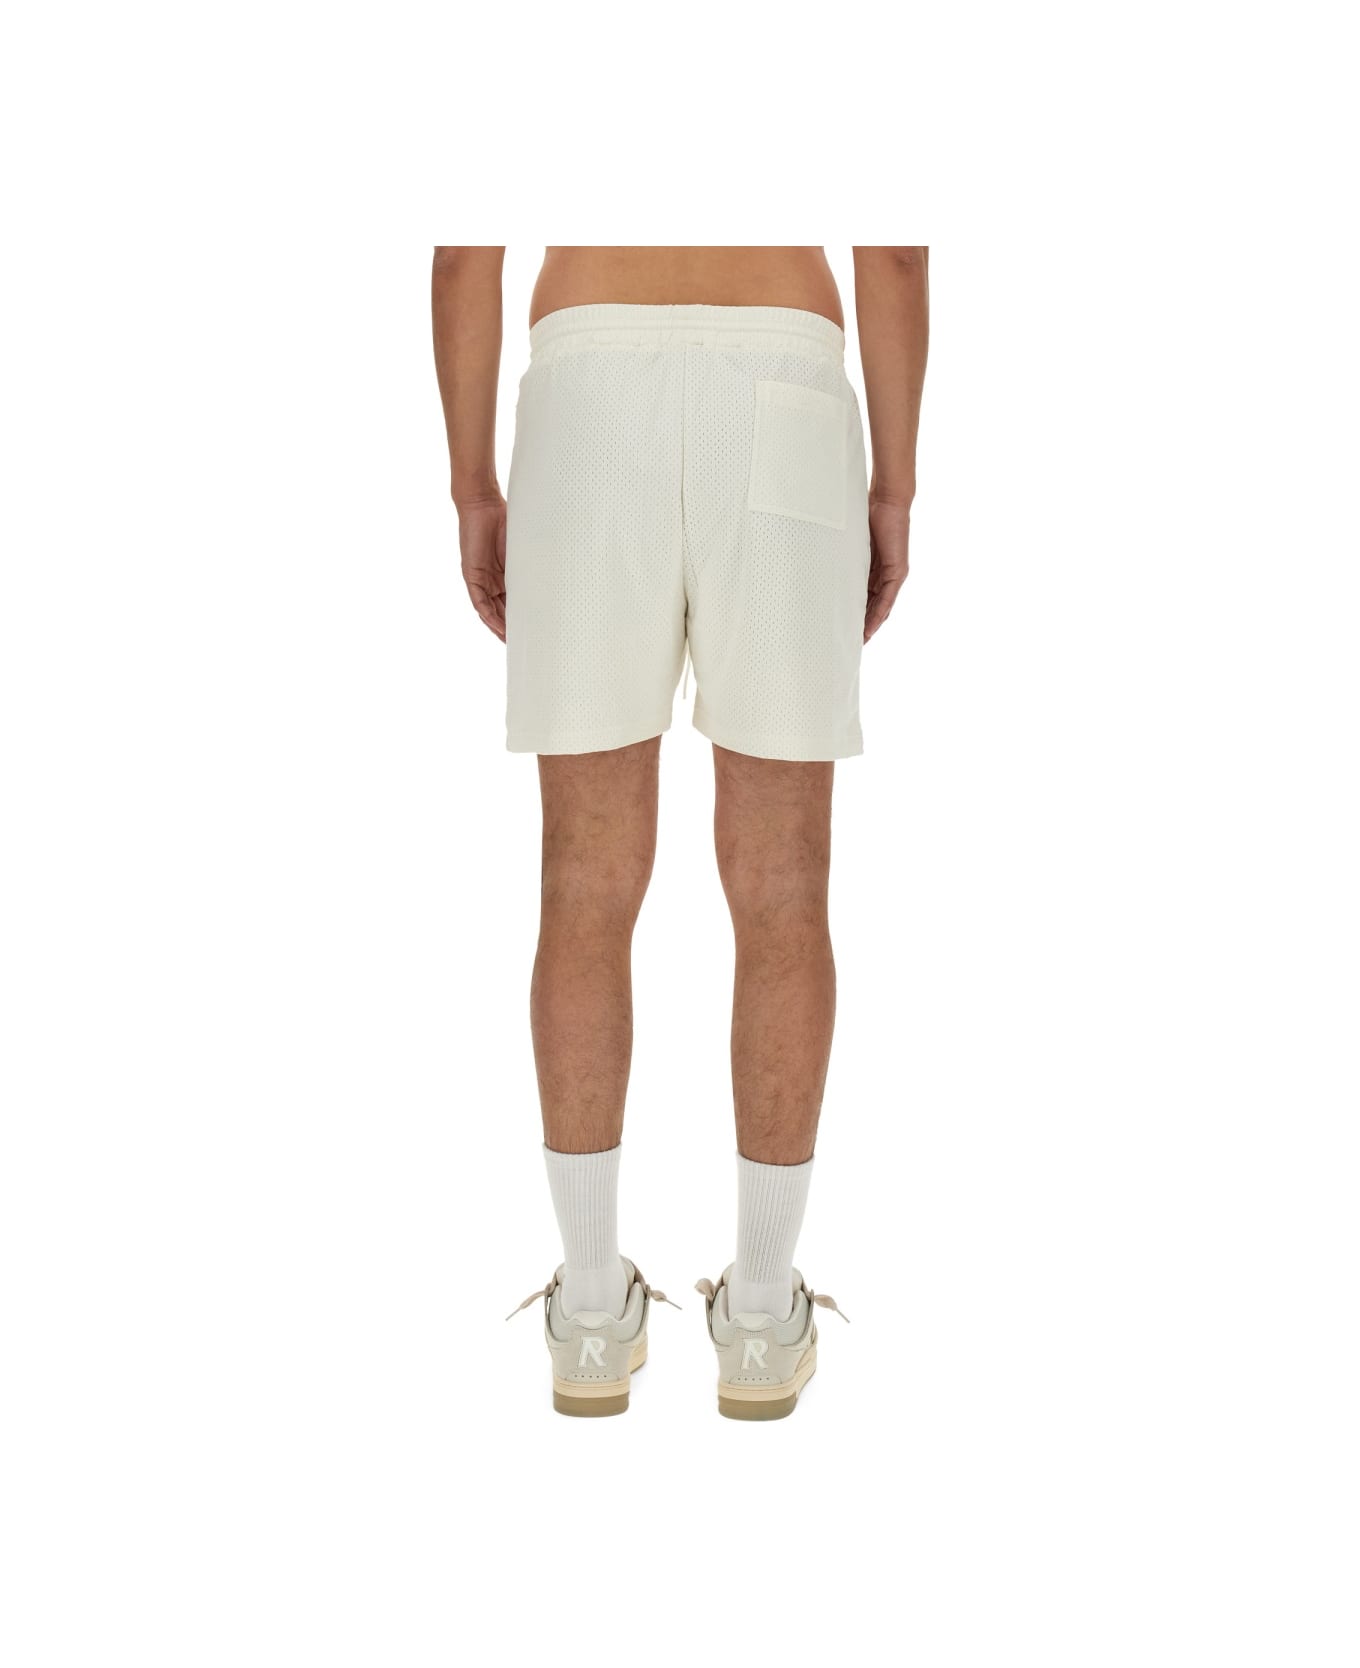 REPRESENT Mesh Bermuda Shorts - WHITE